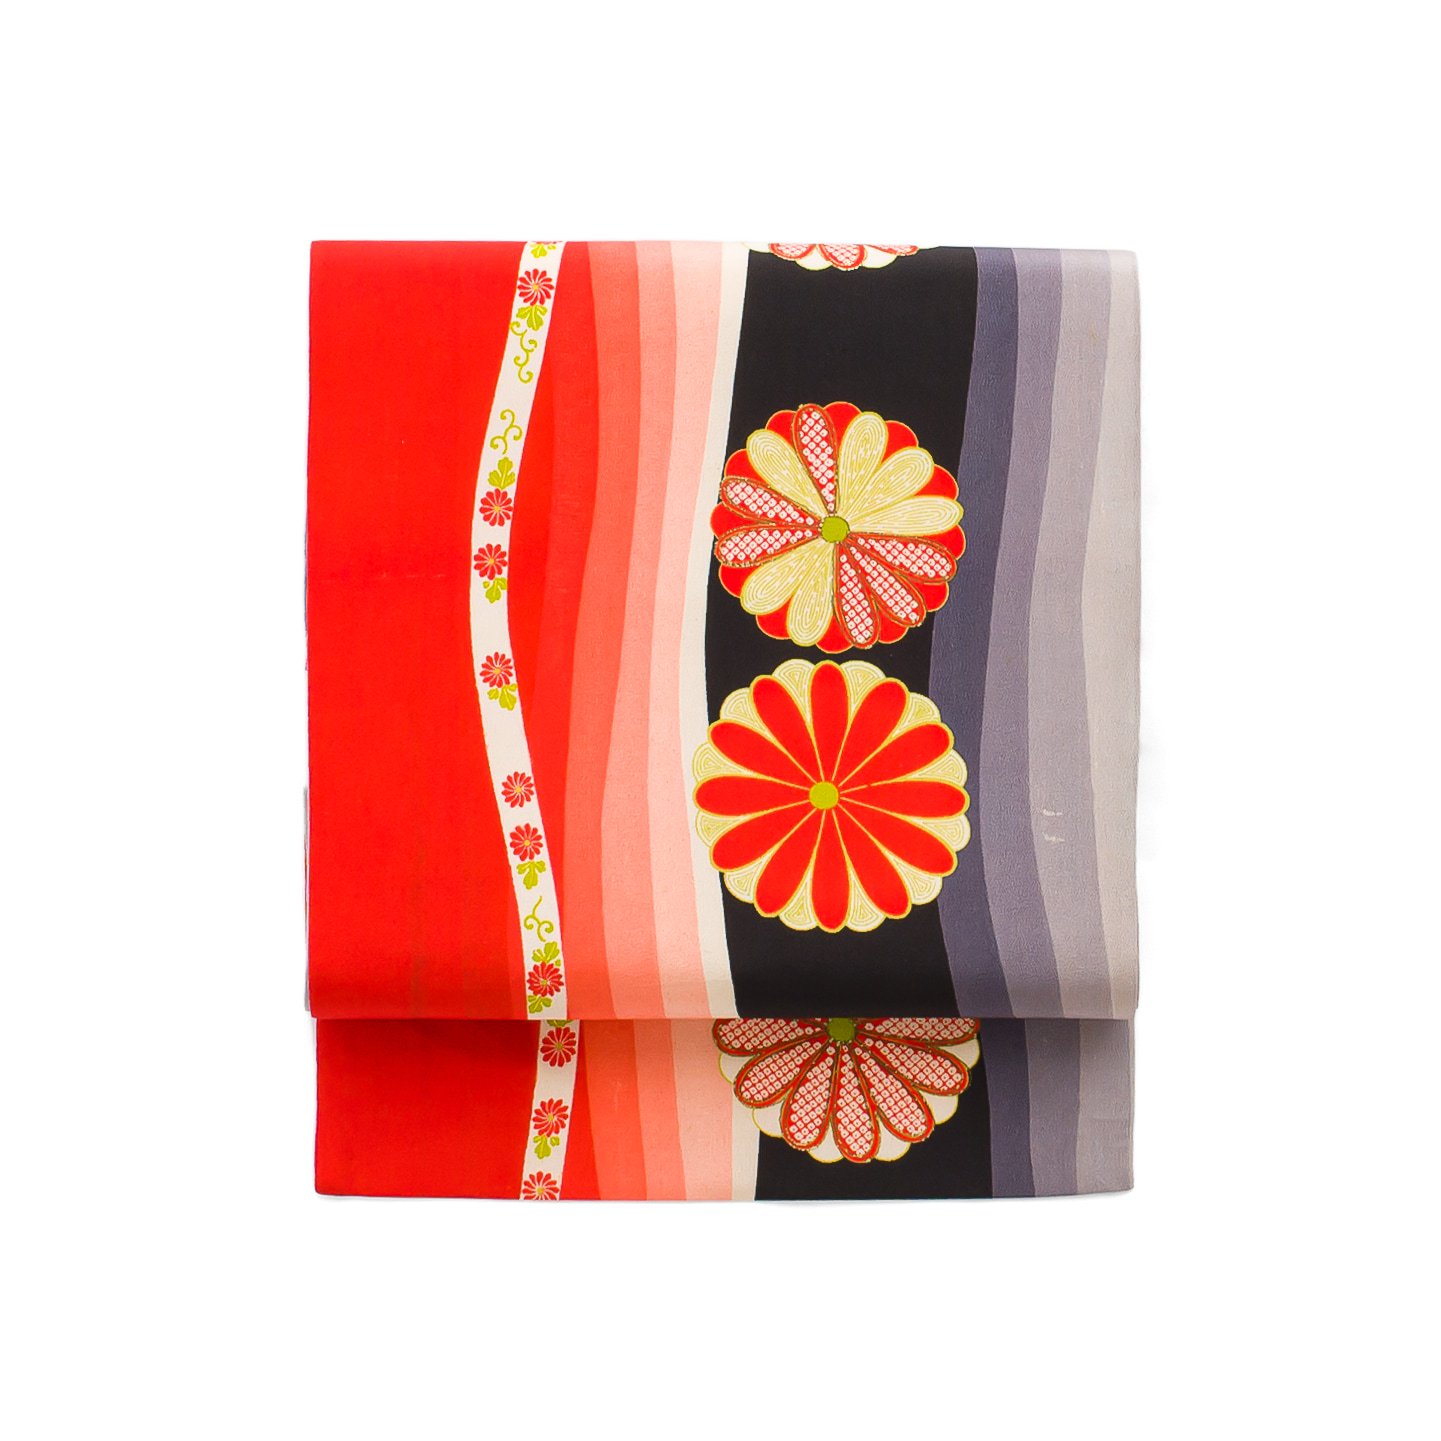 「kaico　赤と黒よろけ縞　菊の花」の商品画像